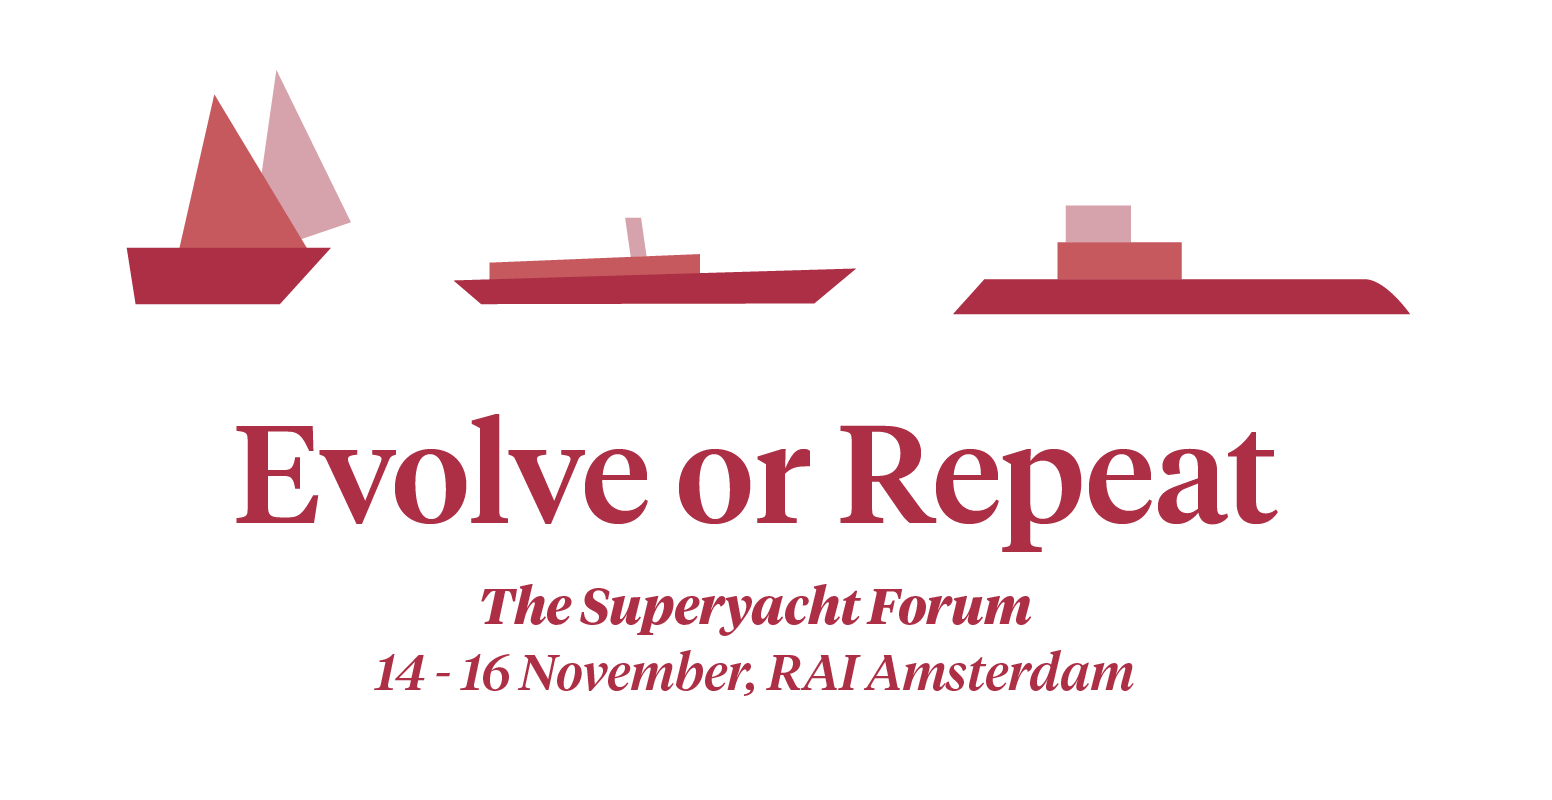 Evolve or Repeat. The Superyacht Forum, 14 - 16 November. RAI Amsterdam.